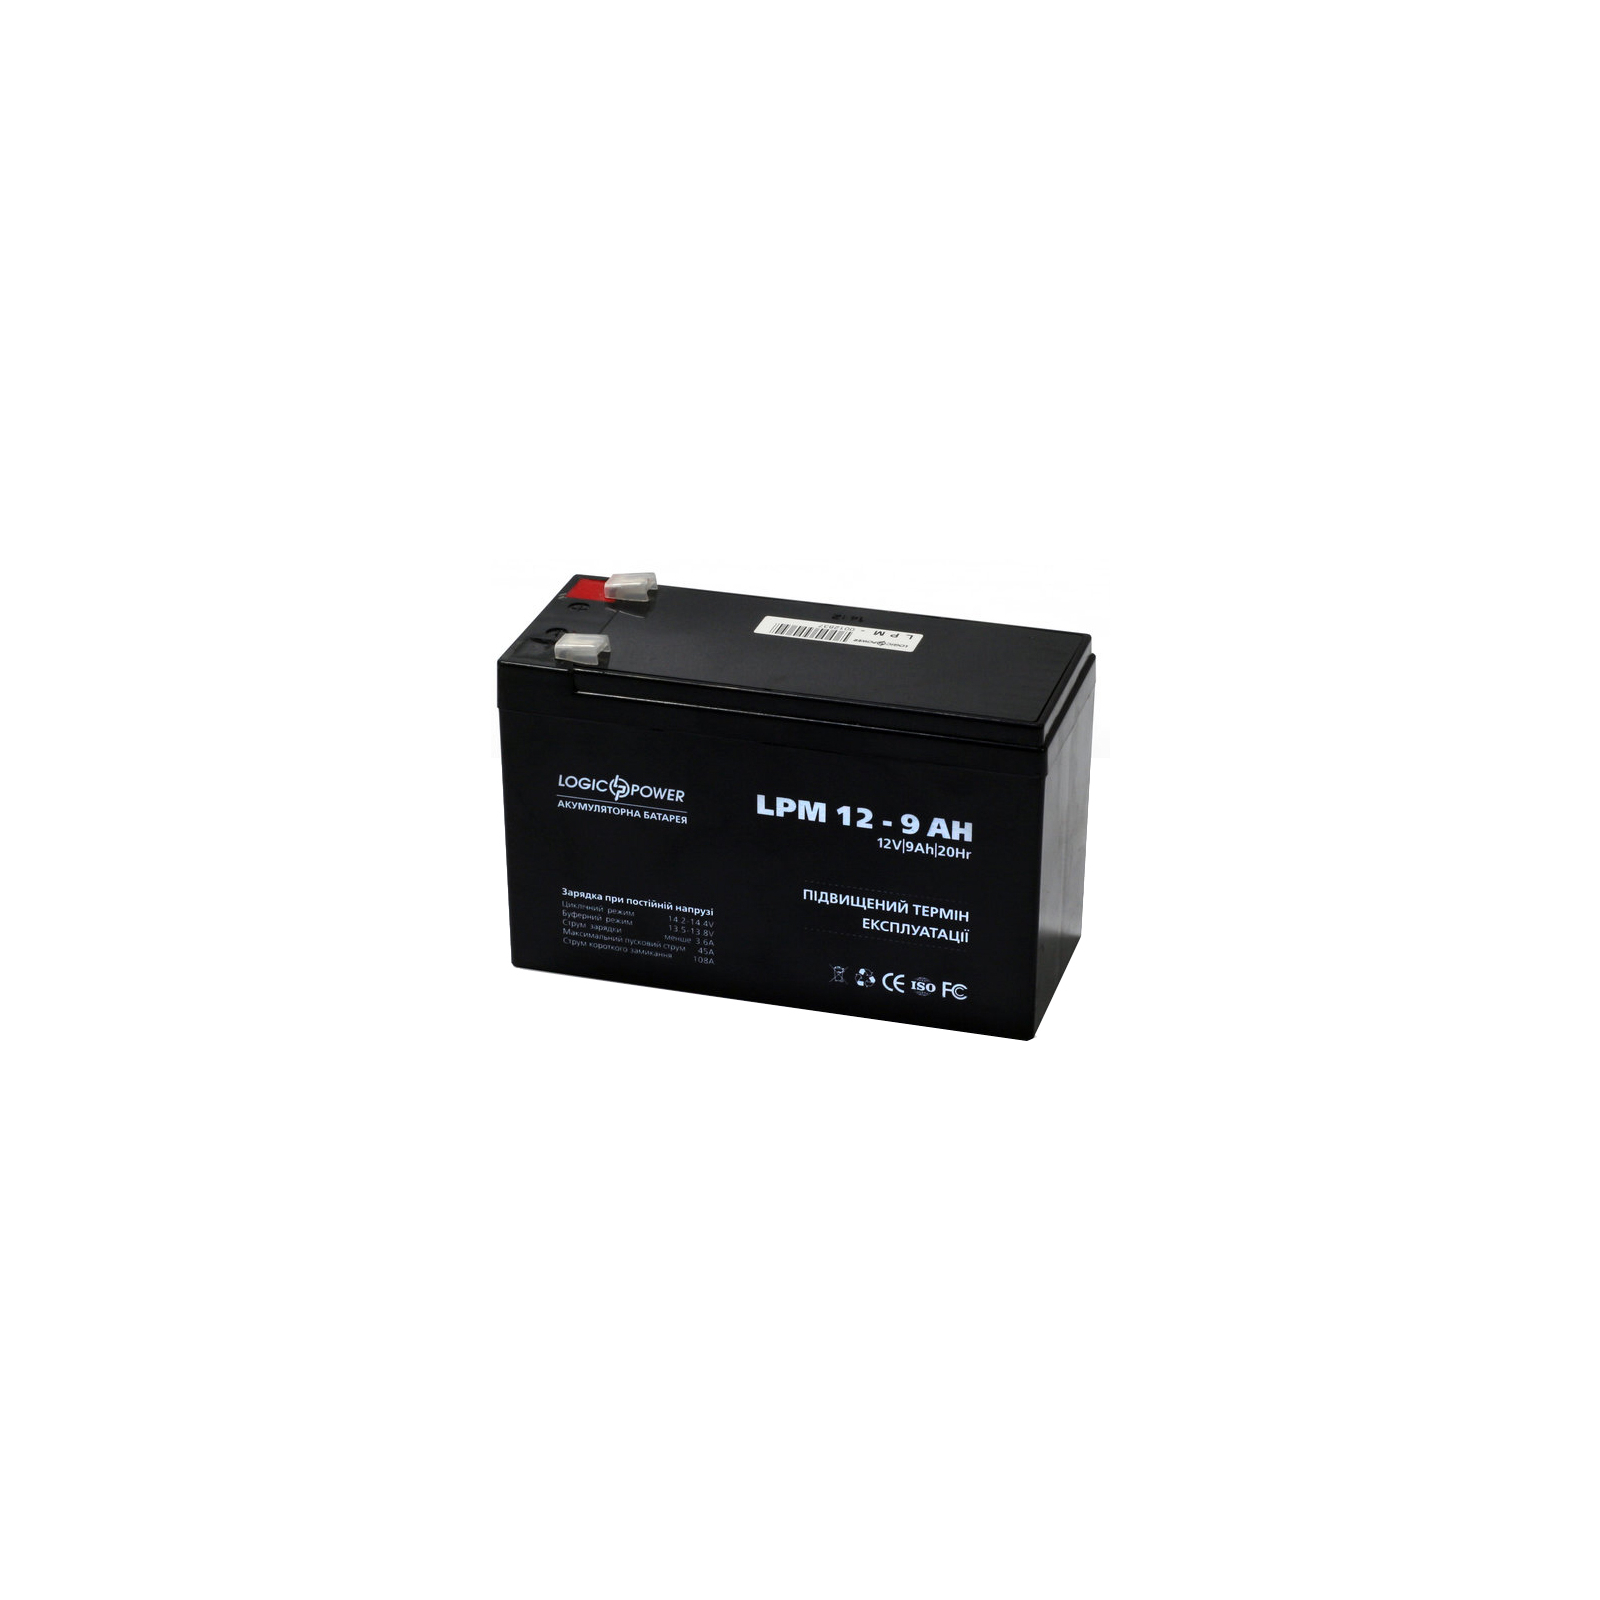 Батарея к ИБП LogicPower LPM 12В 9Ач (3866) изображение 2